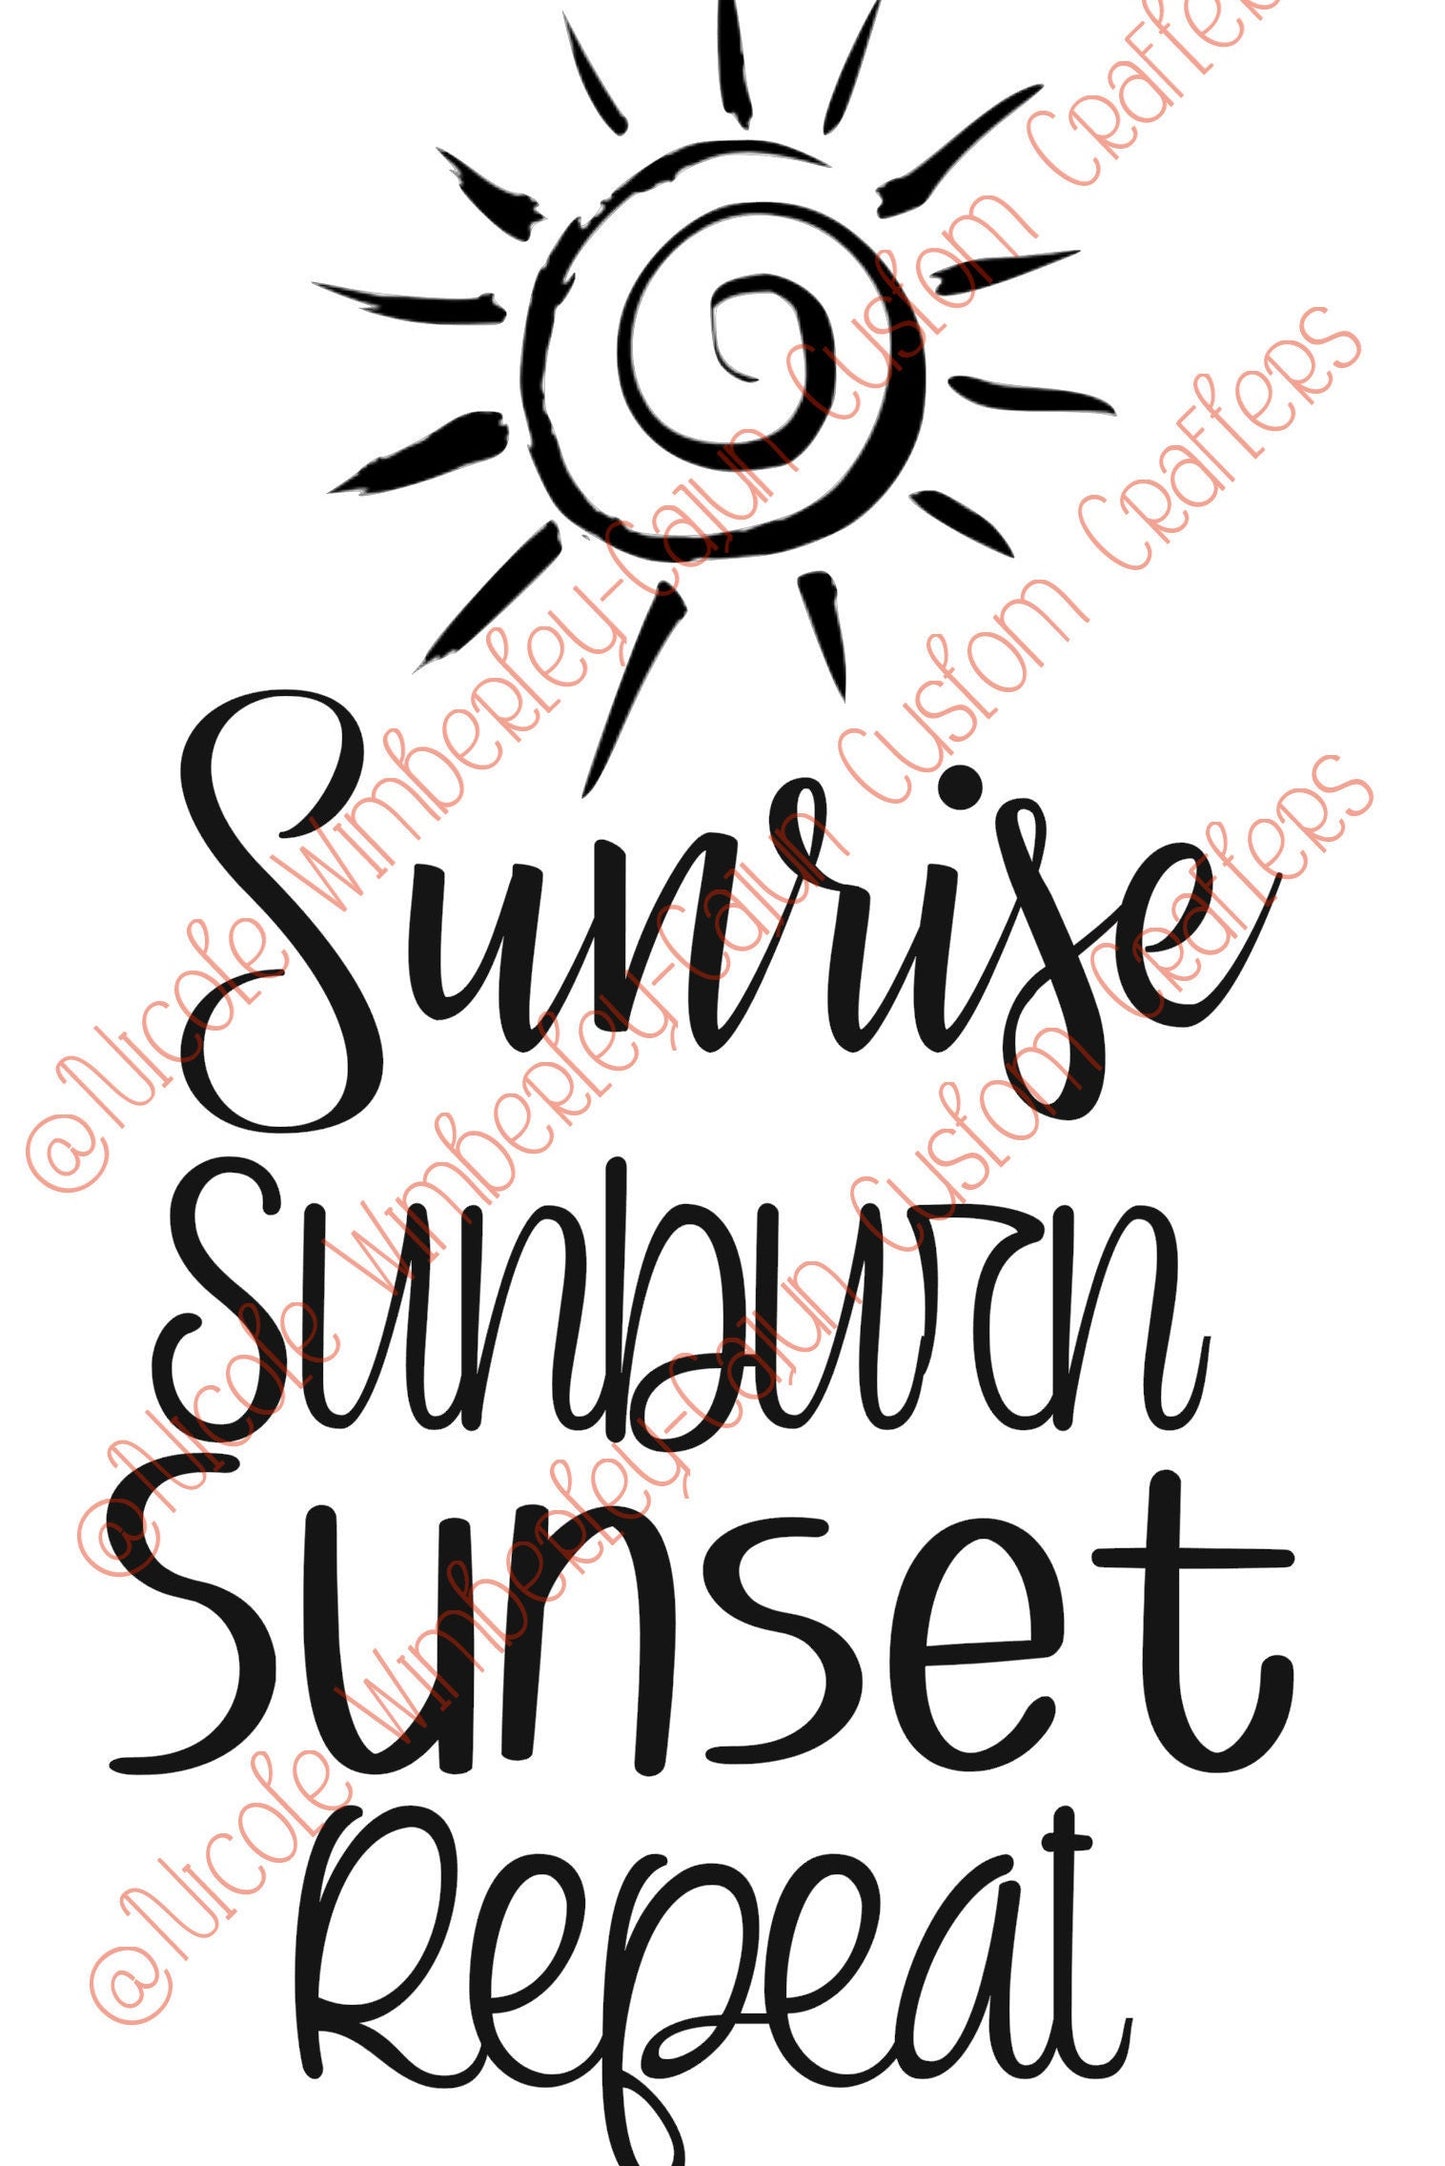 Sunrise Sunburn Sunset Repeat Digital Download